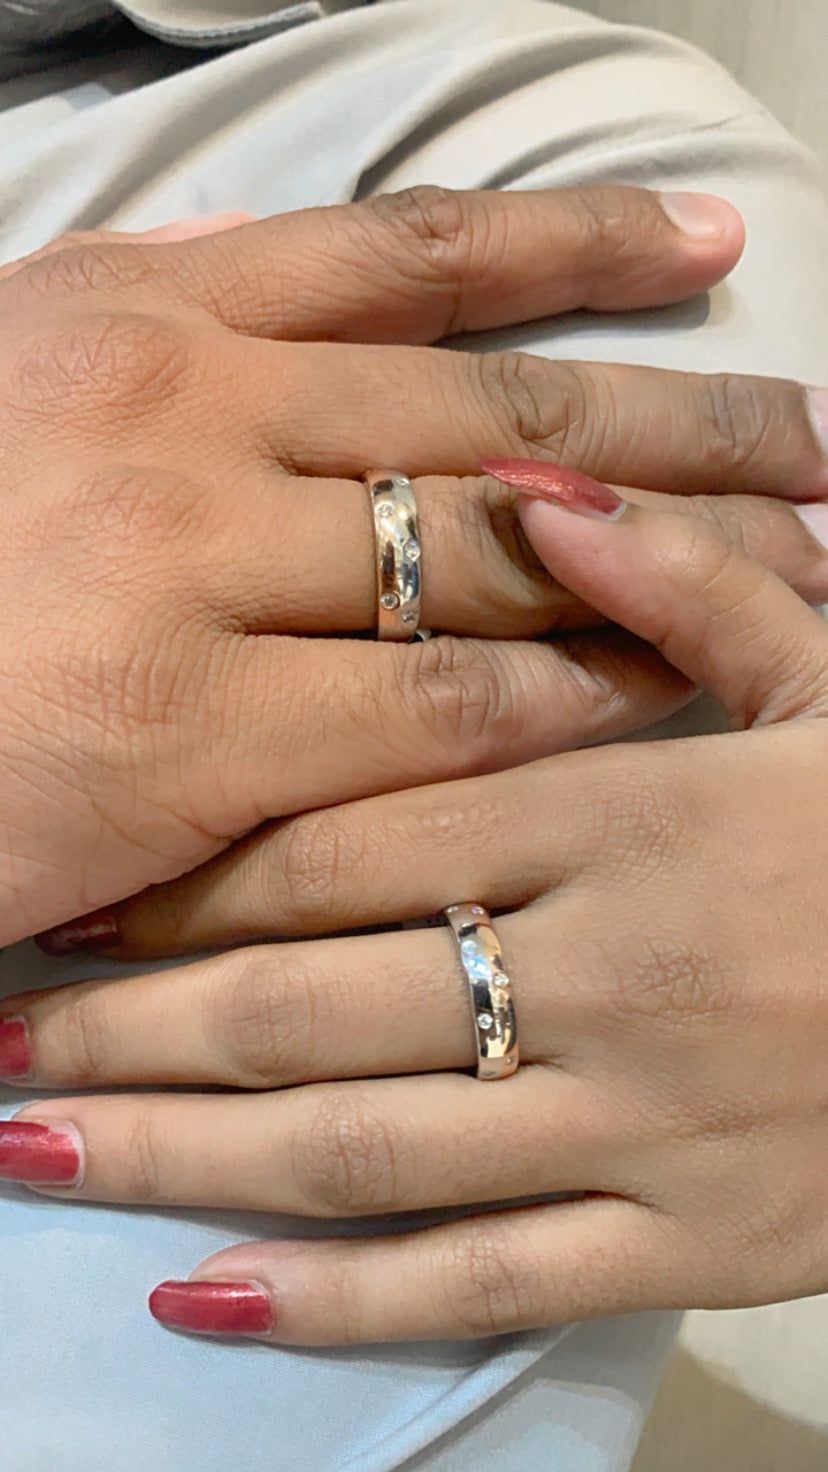 Heart Design 925 Silver Couple Ring